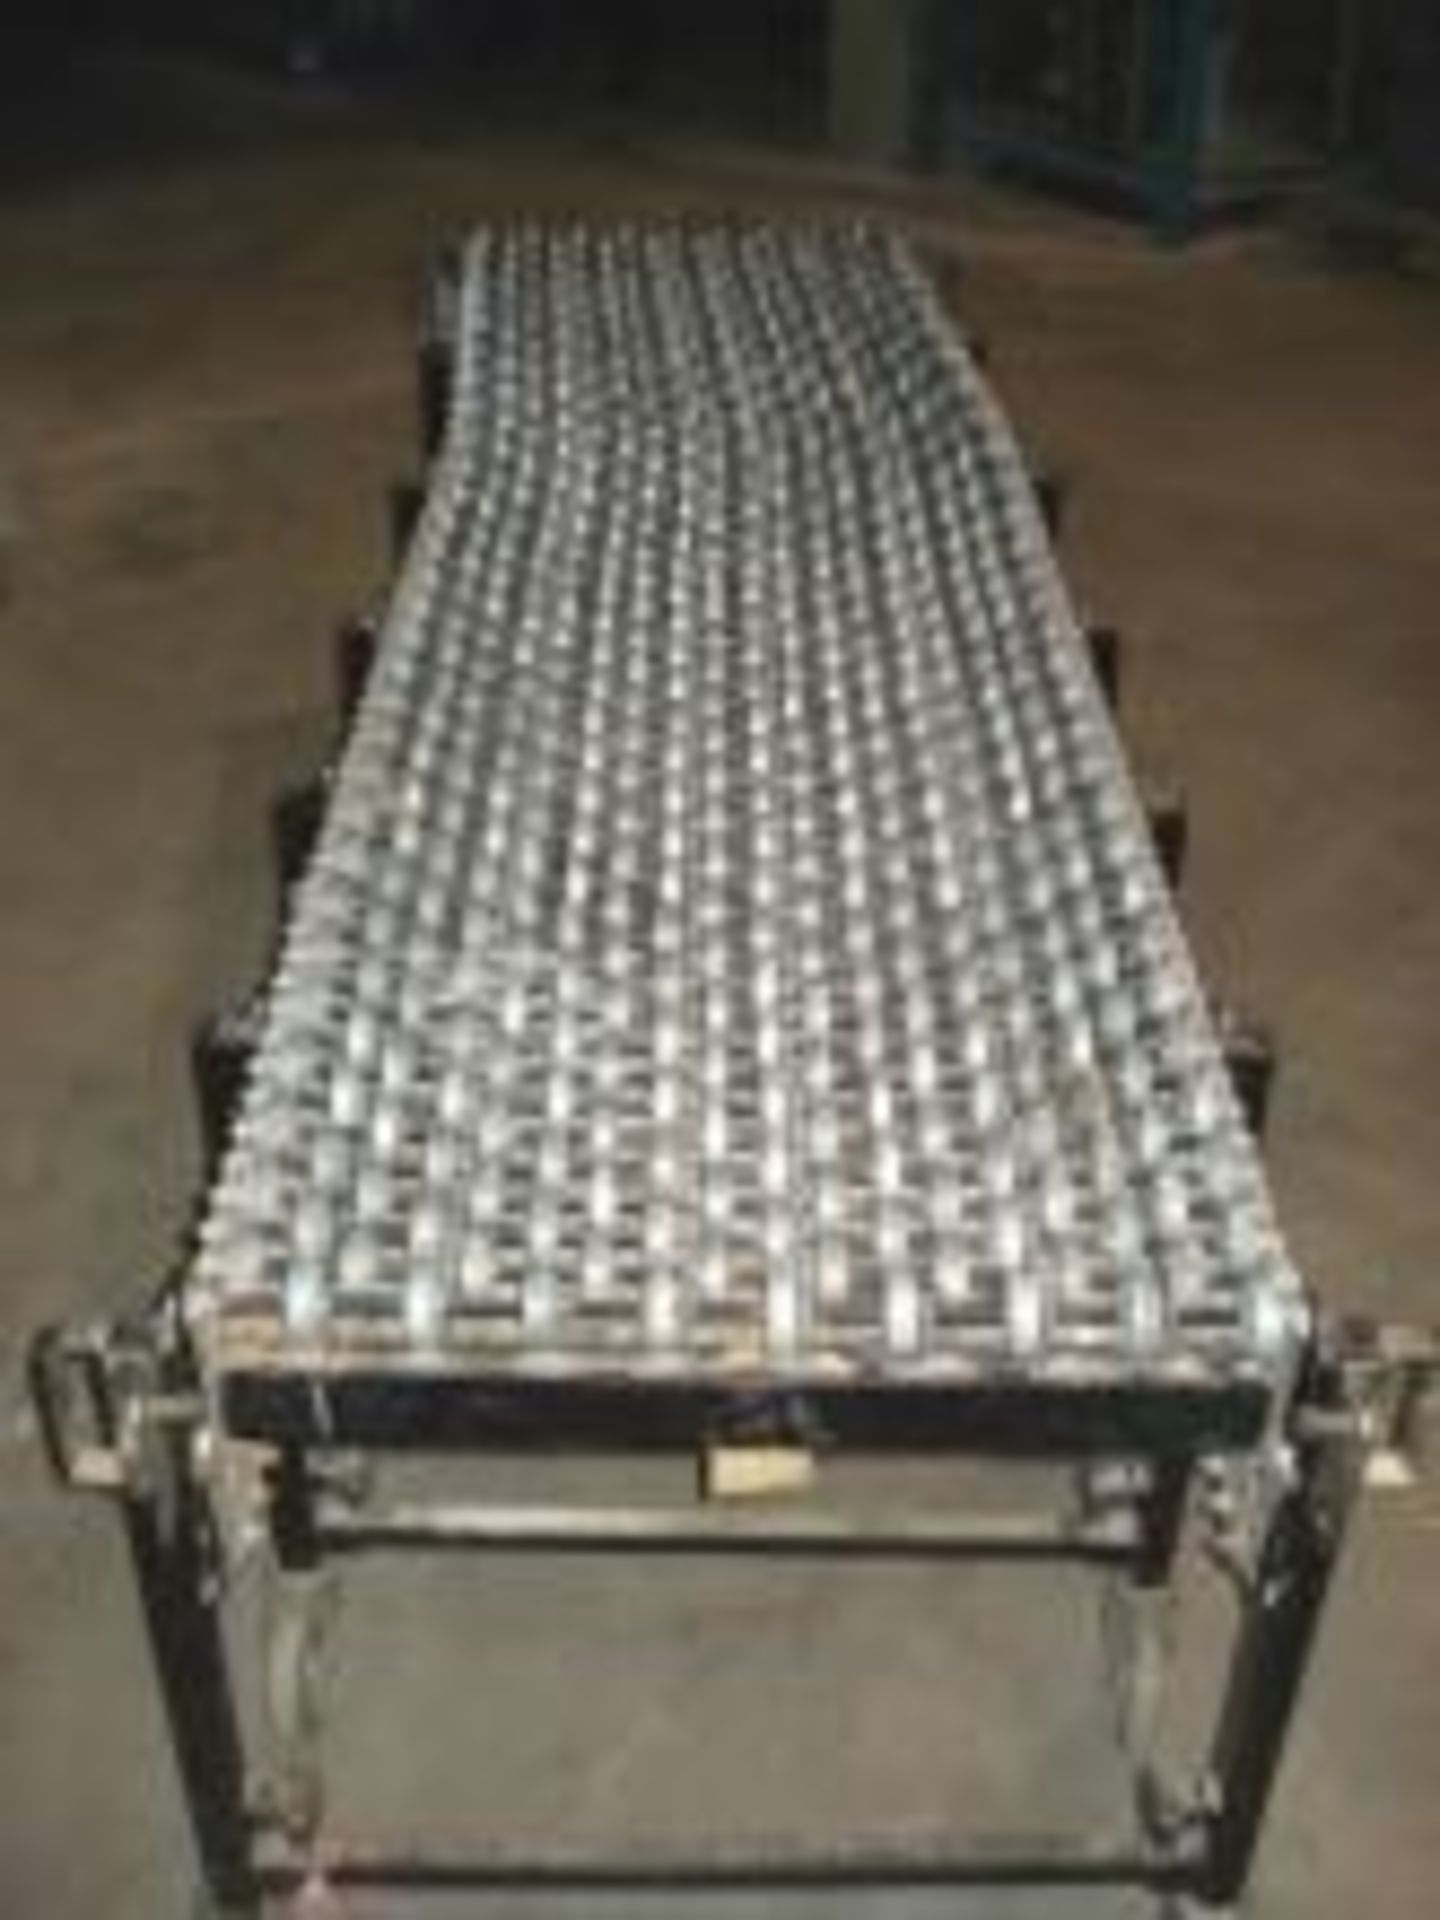 Used BestaFlex 24’ Long Roller Conveyor. Flexible roller conveyor.  Measures 24’ long when fully